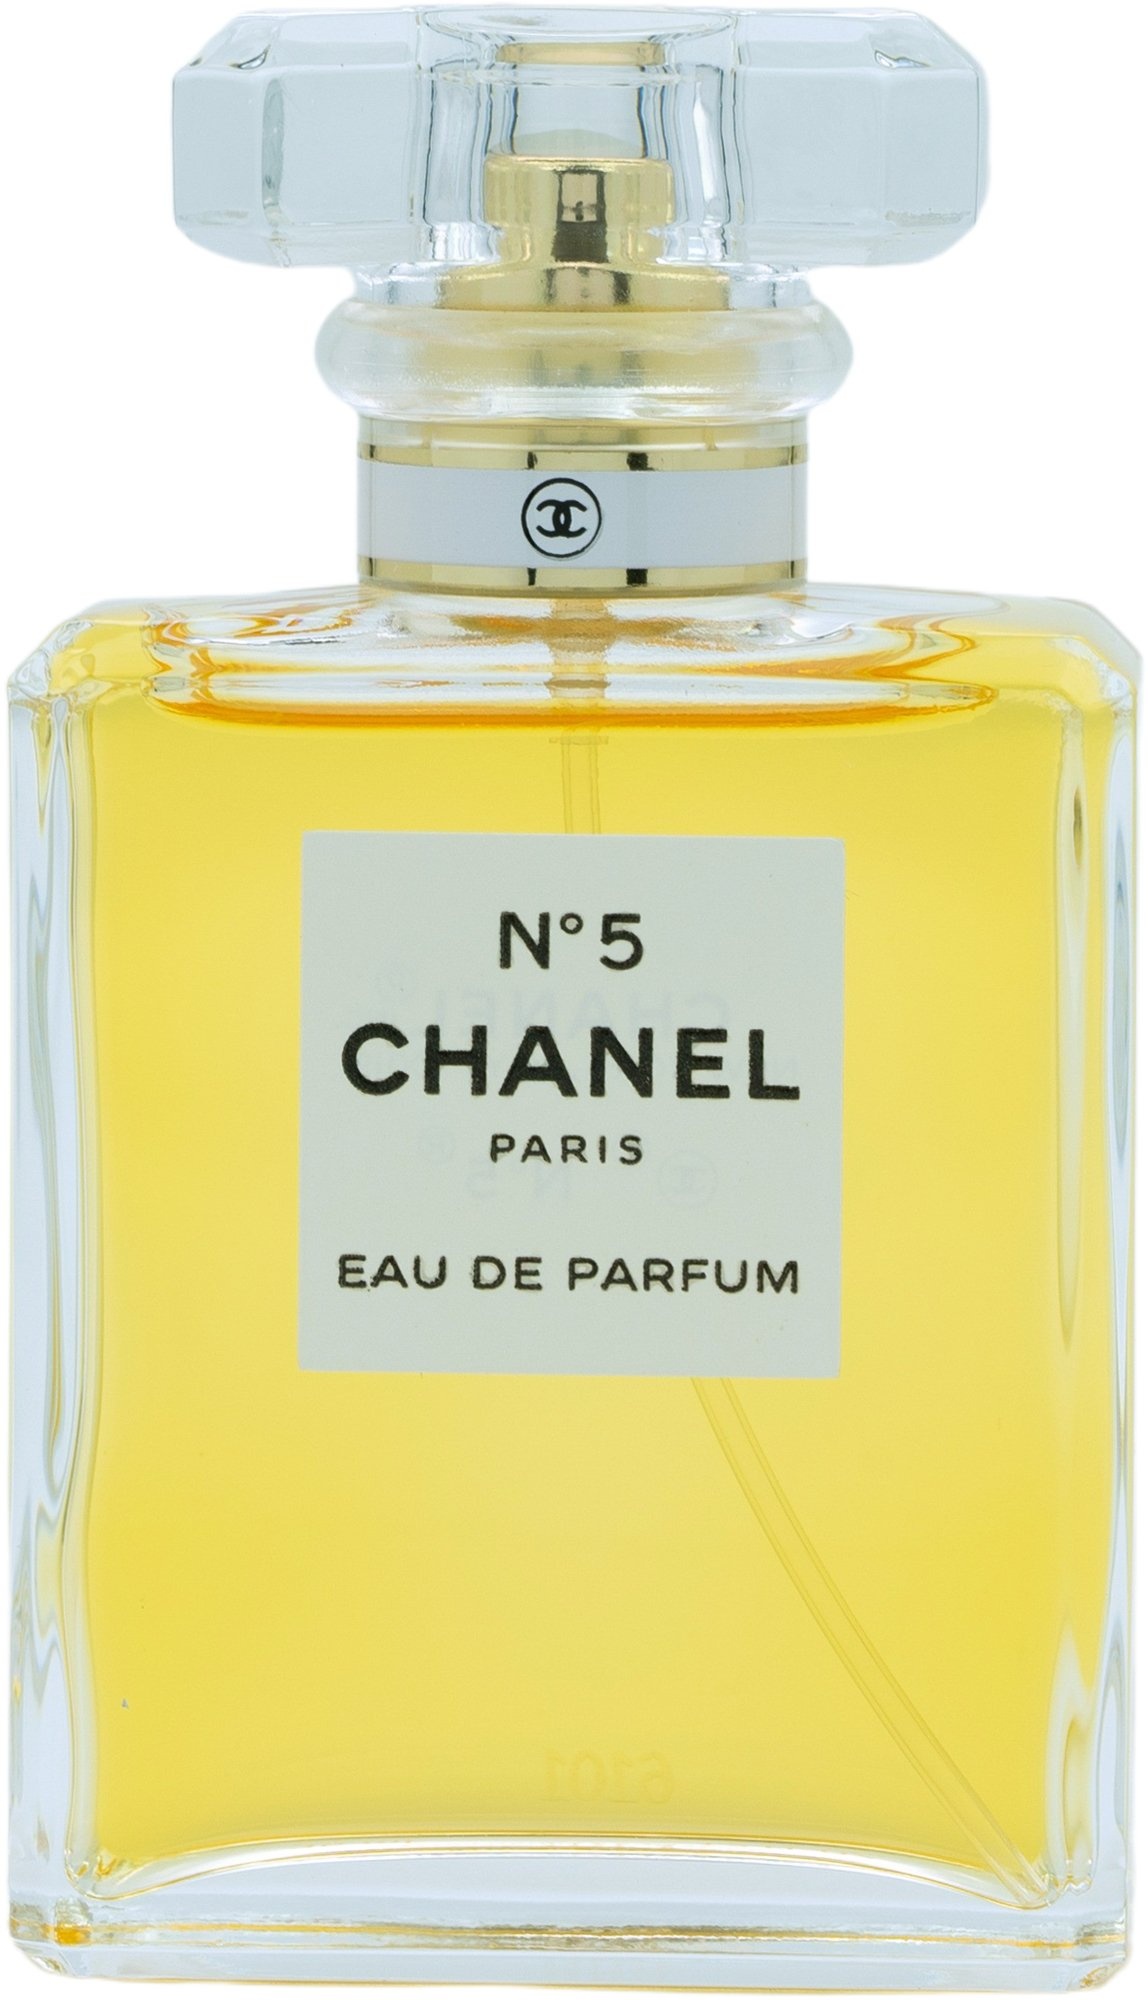 No. 5 Eau de Parfum ab 79,90 kaufen billiger.de